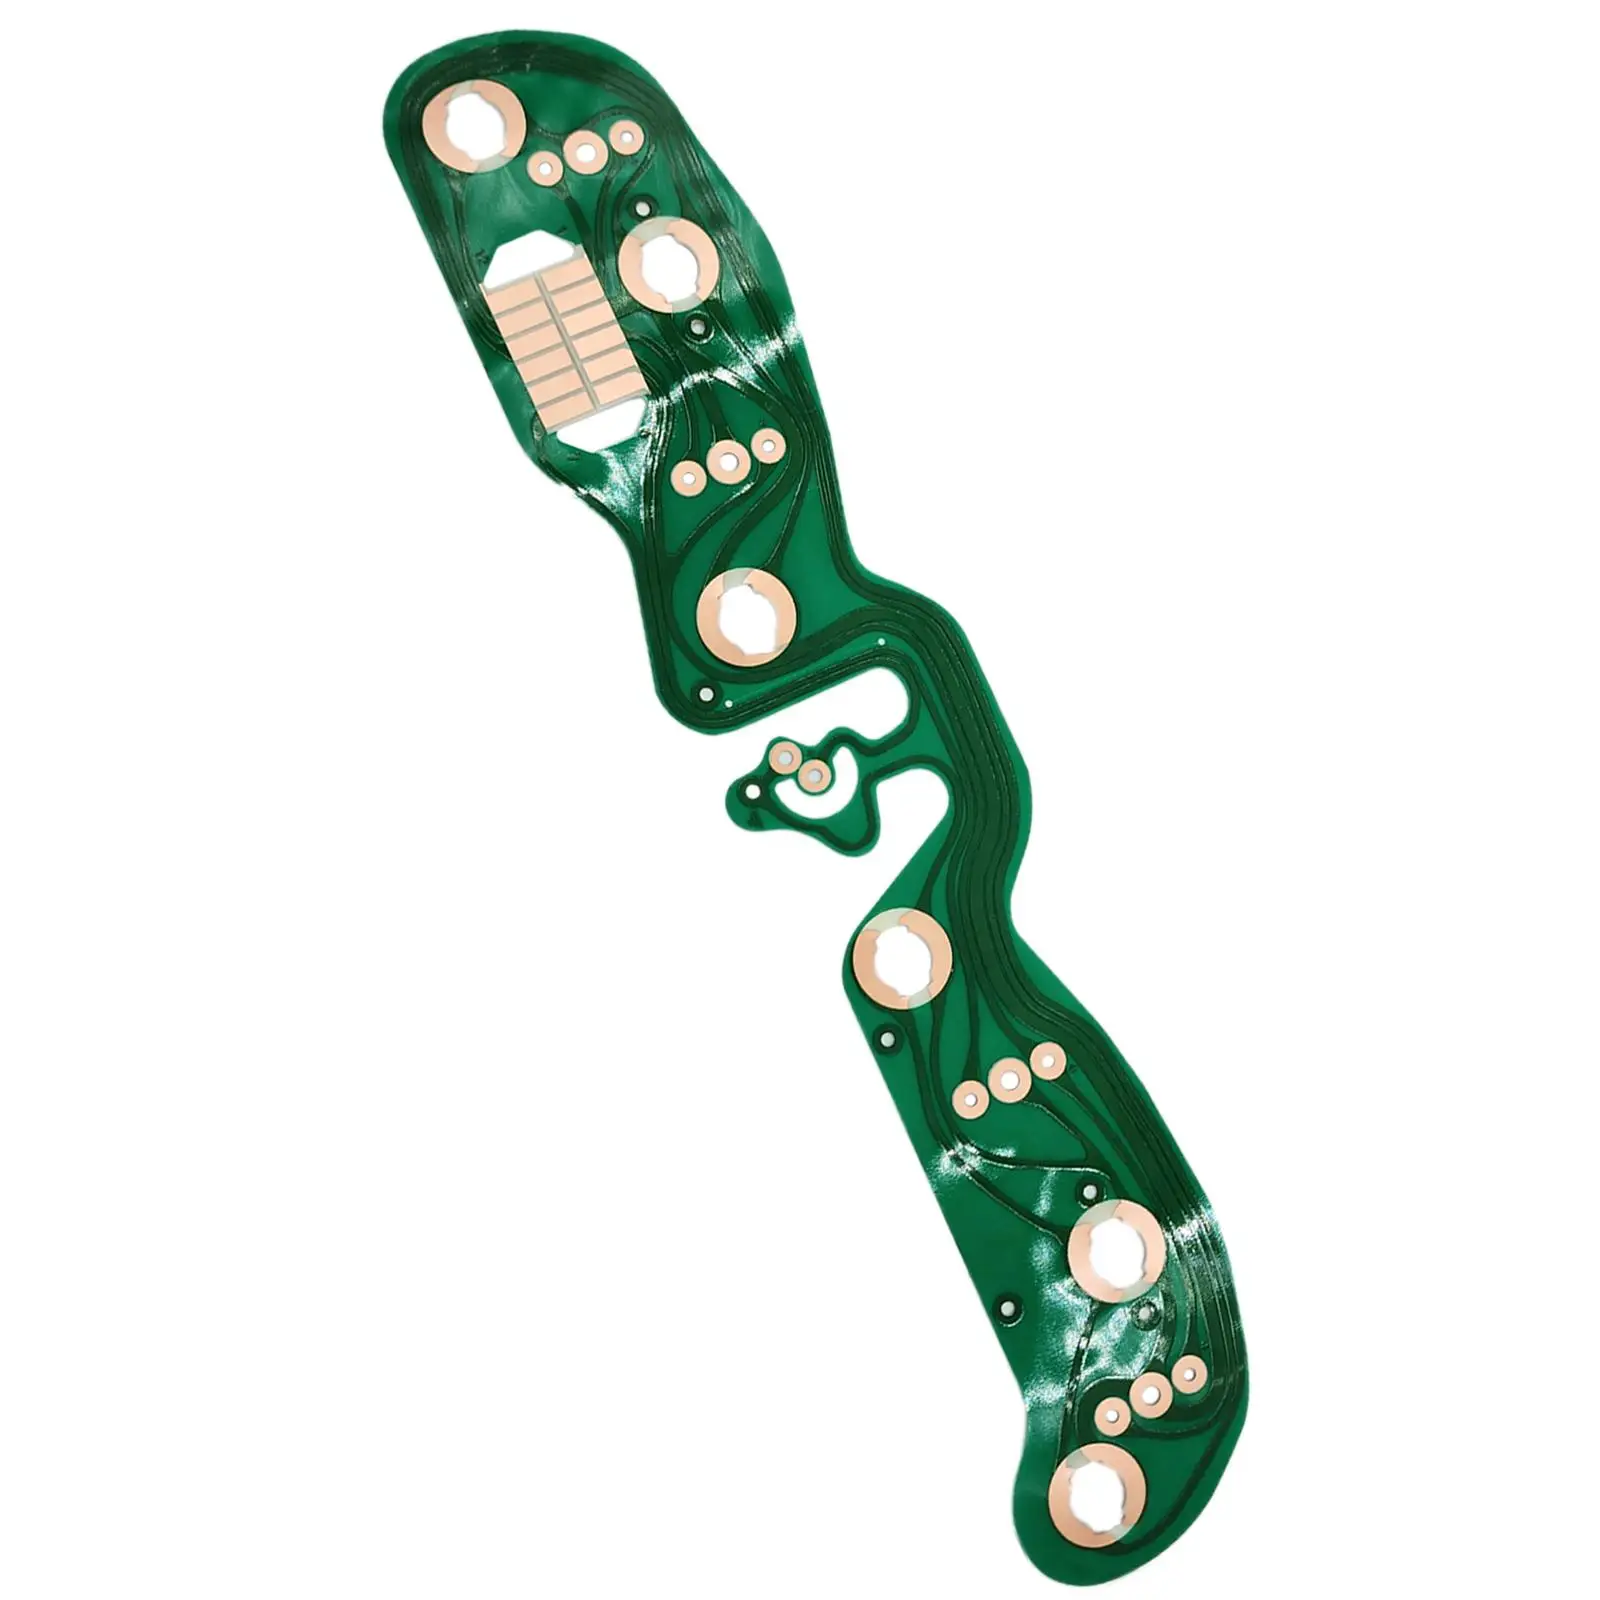 Gauges Printed Circuit Board for Repair Spare Parts